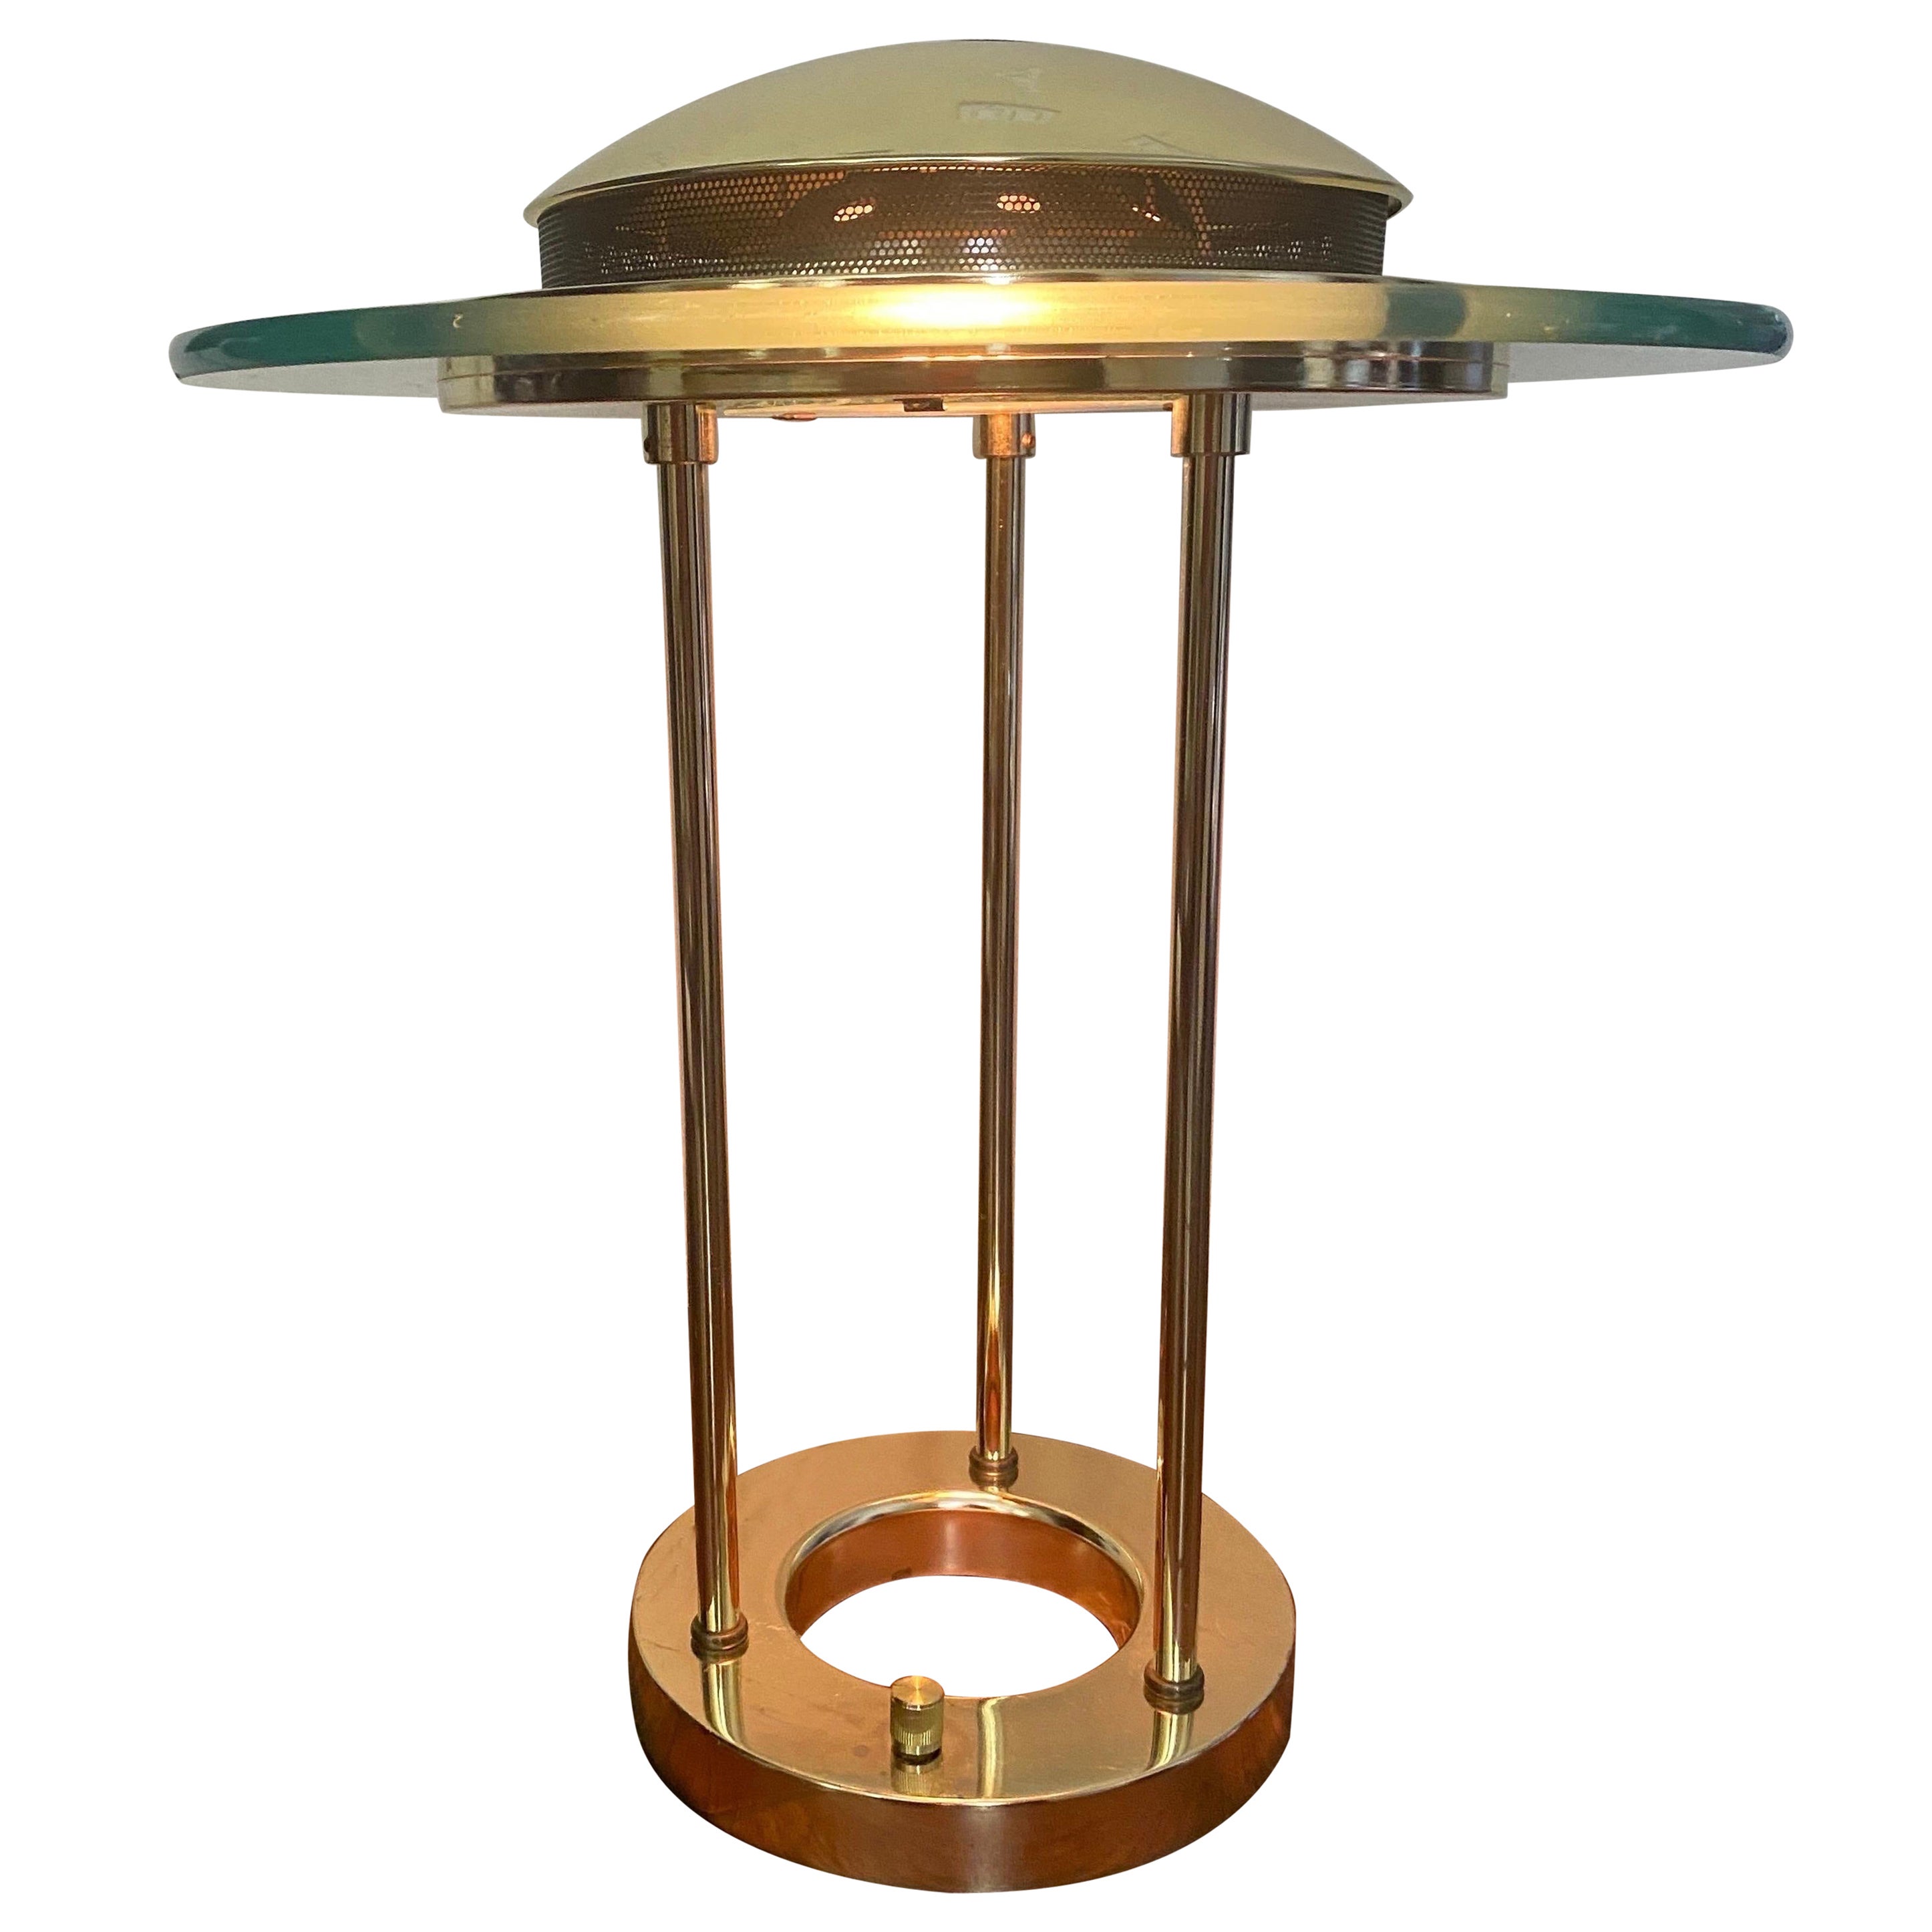 Robert Sonneman Vintage 1980s Modernist “Saturn” Brass & Glass Lamp